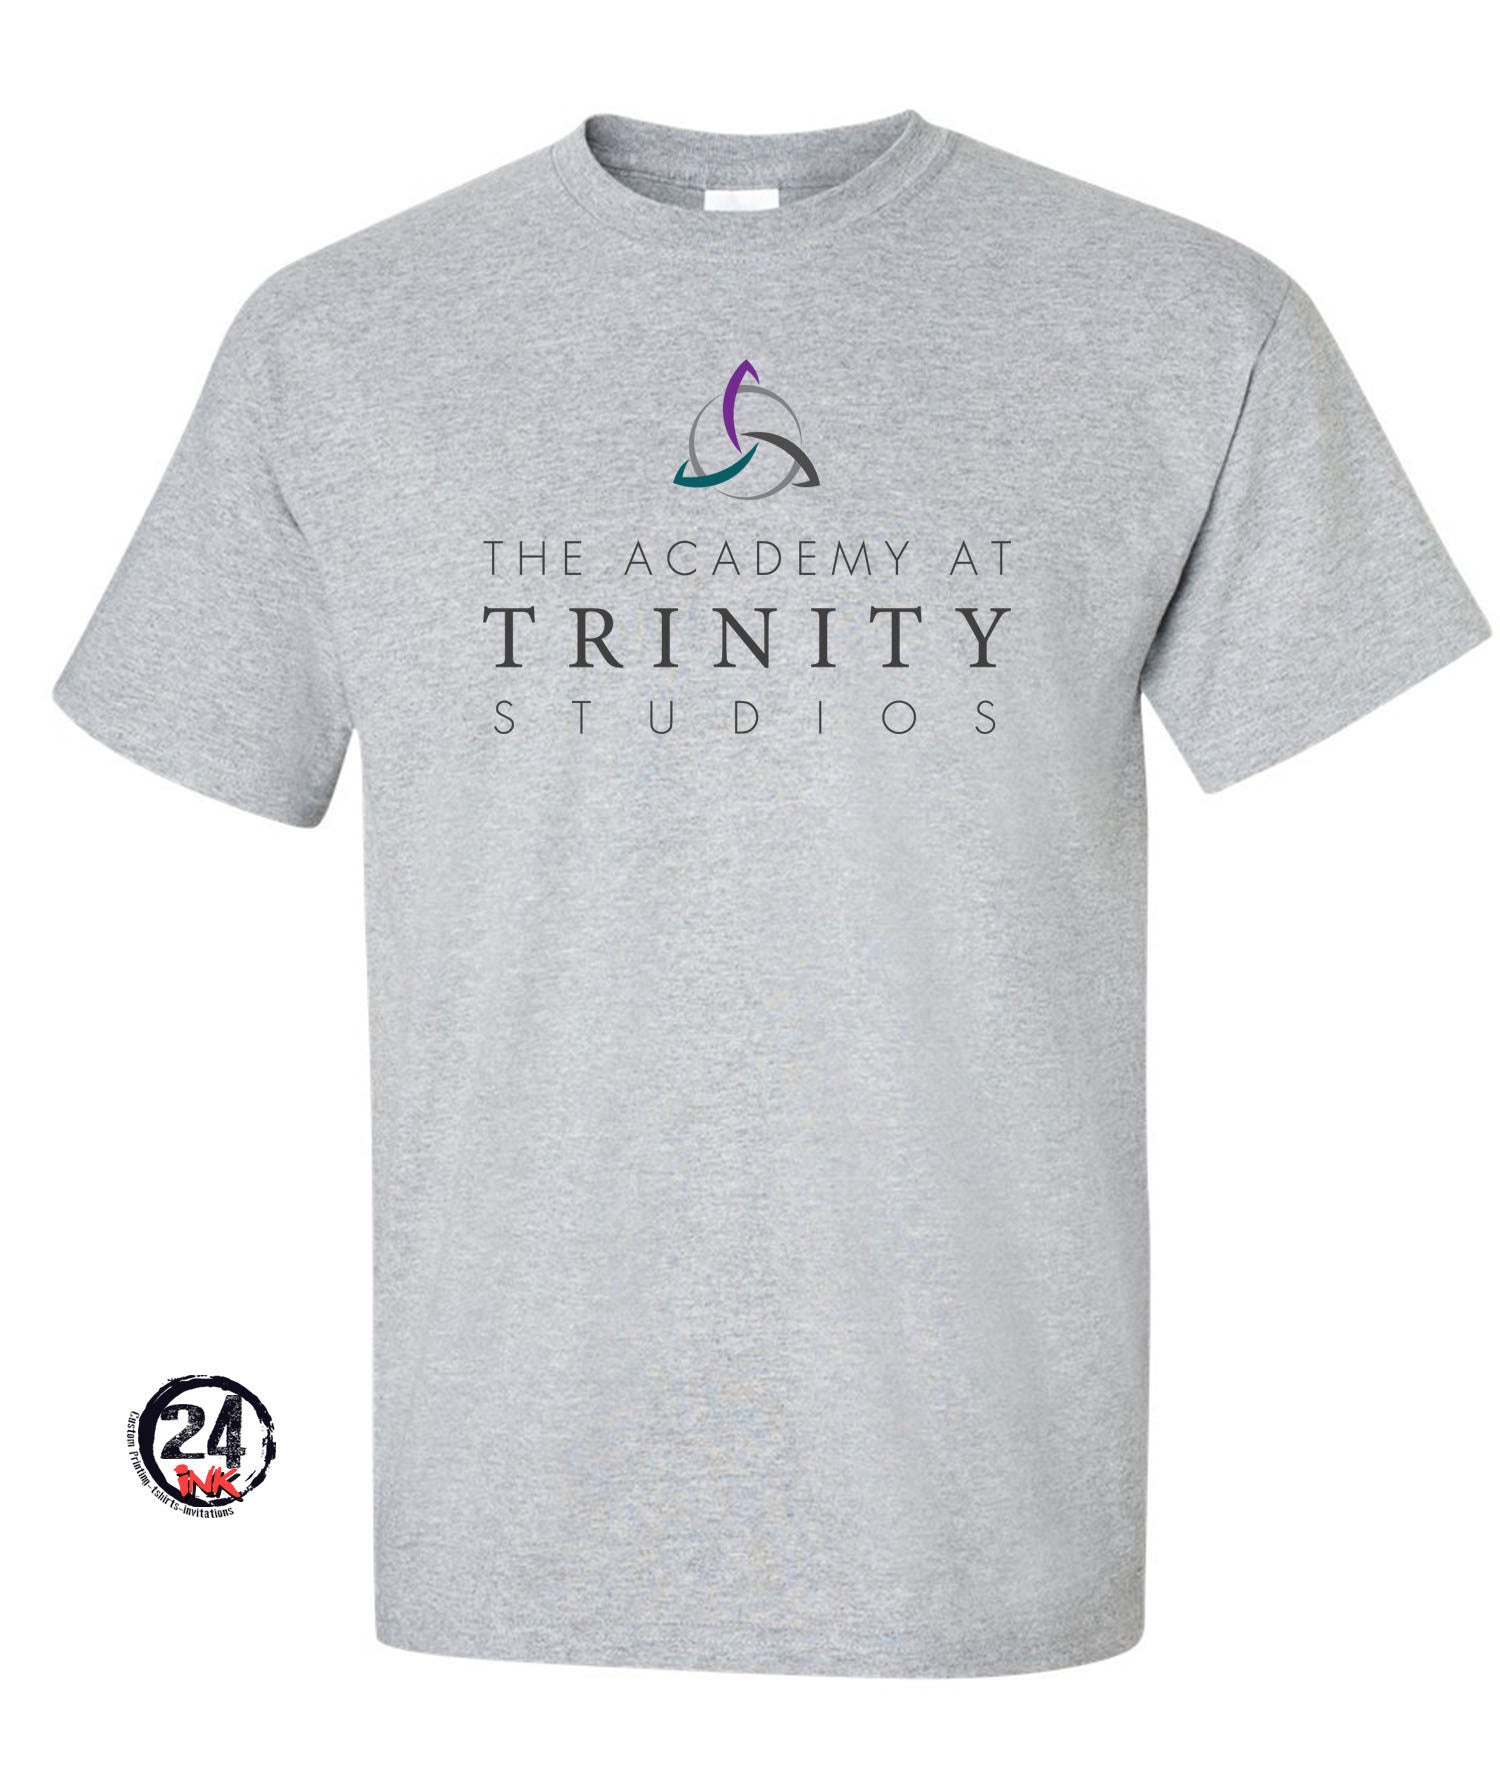 The Academy at Trinity T-Shirt